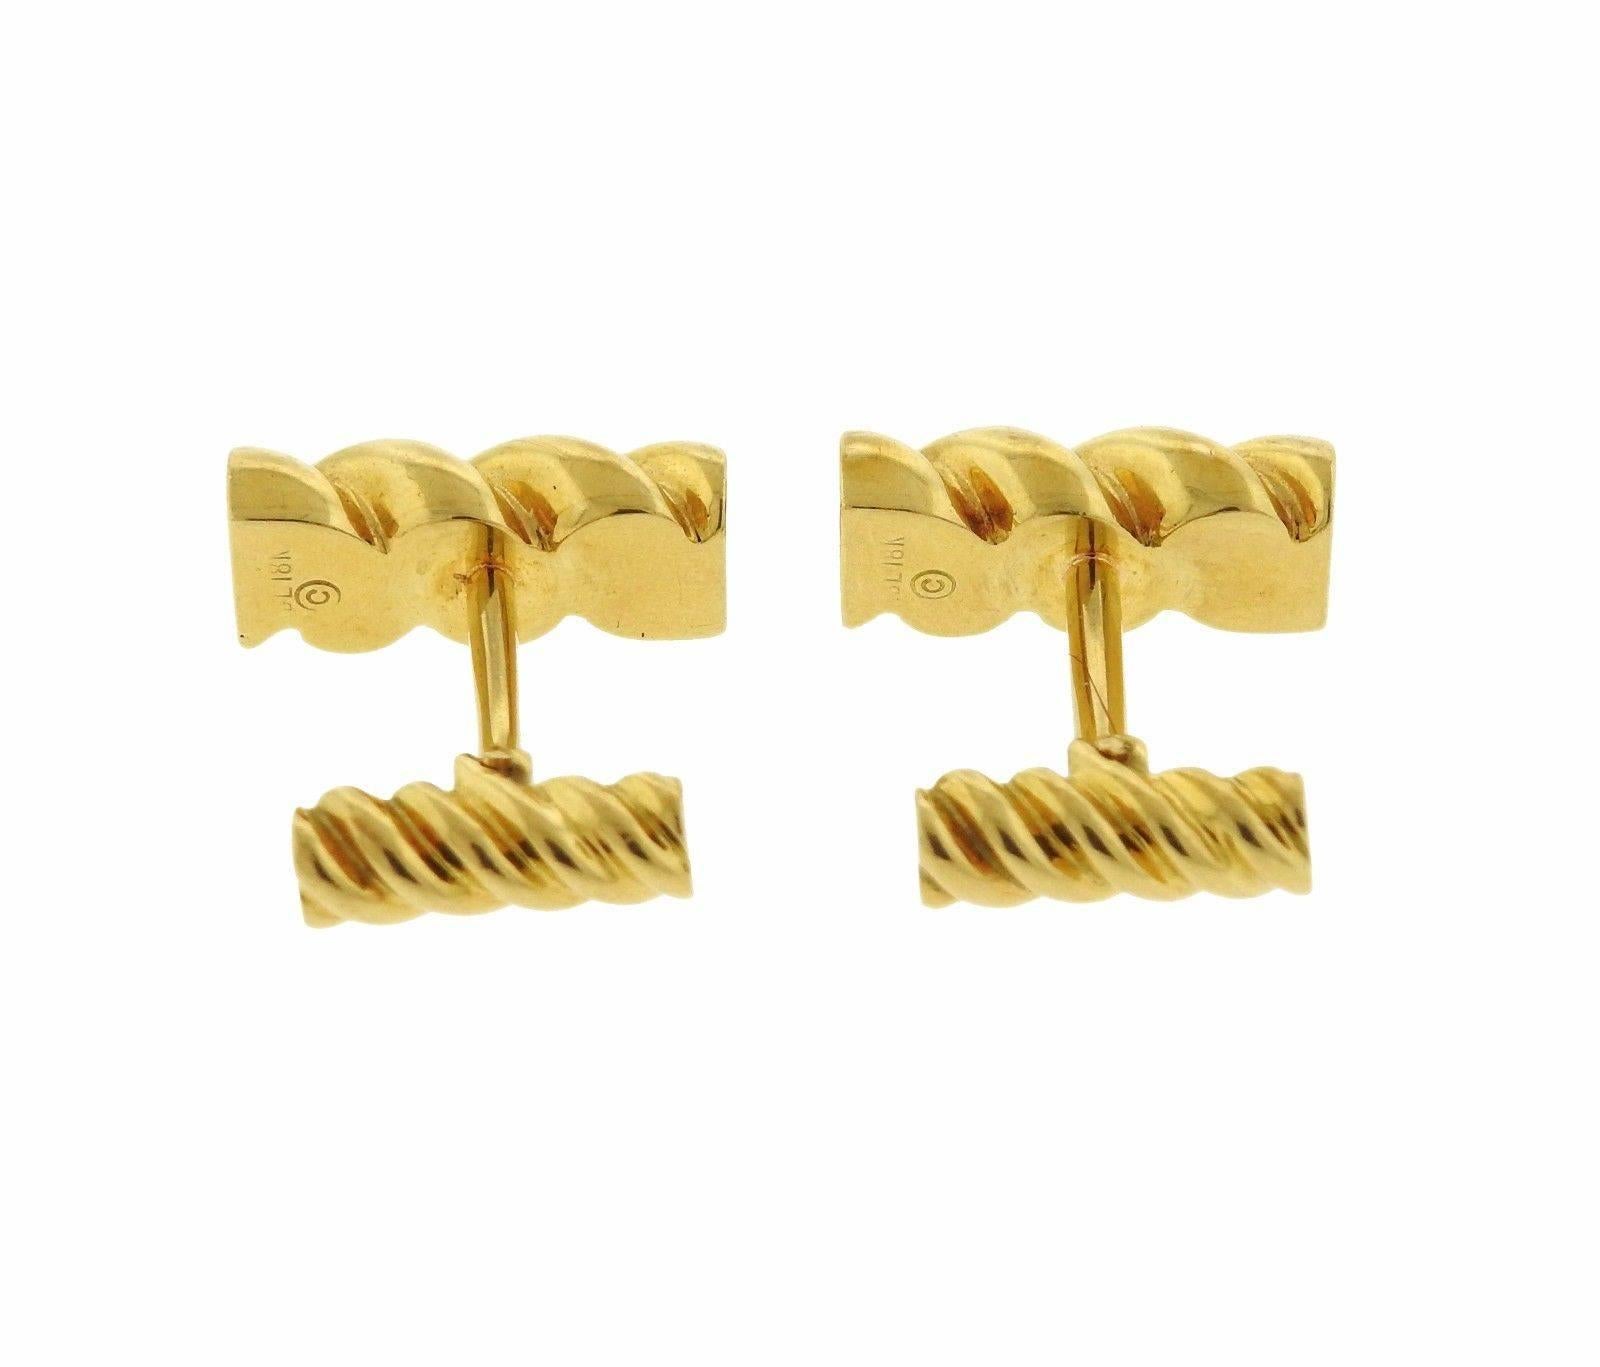 A pair of classic 18k yellow gold cufflinks, featuring twist motif. Cufflink top measures 18mm x 8mm. Weight - 15.1 grams 